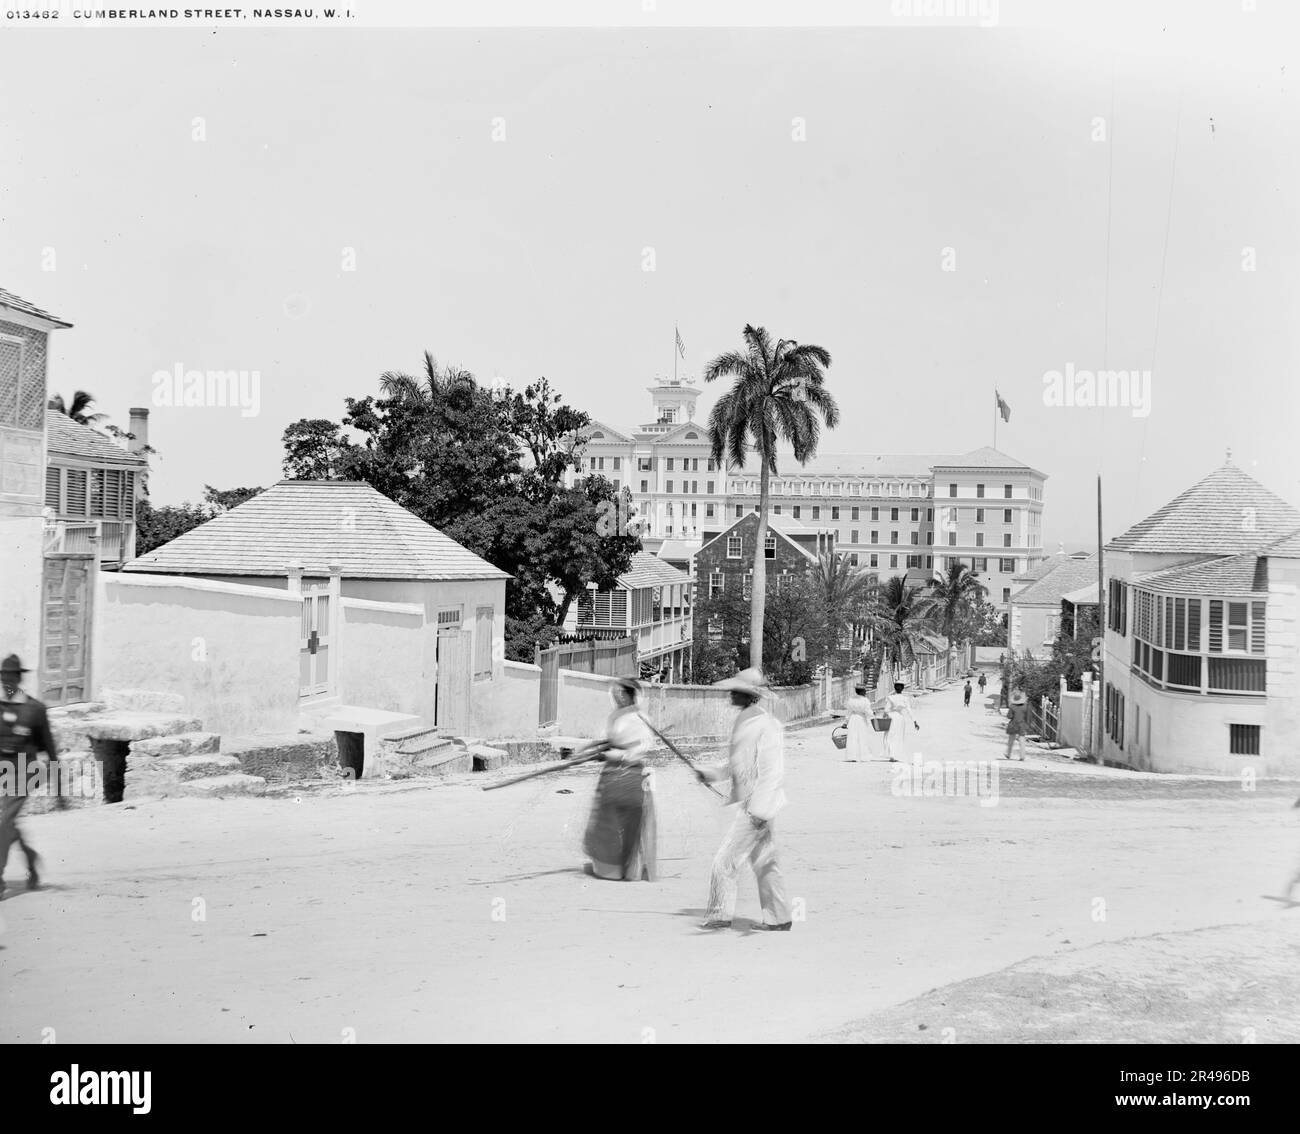 Cumberland Street, Nassau, W.I., between 1900 and 1906. Stock Photo